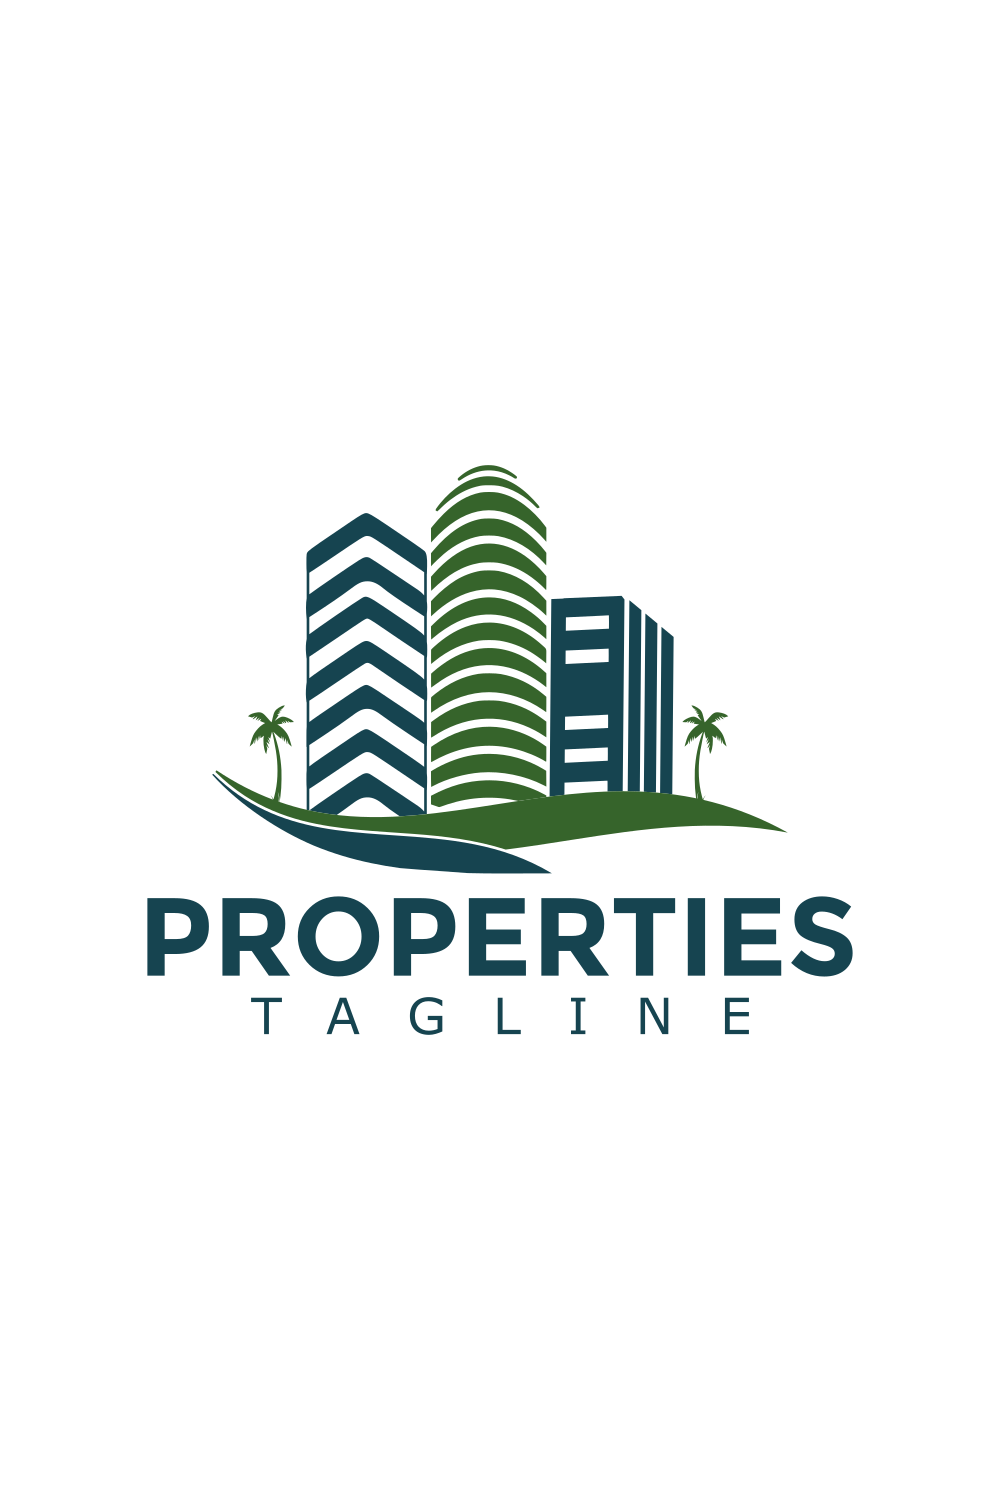 Elegant Properties Logo Design Template pinterest image.